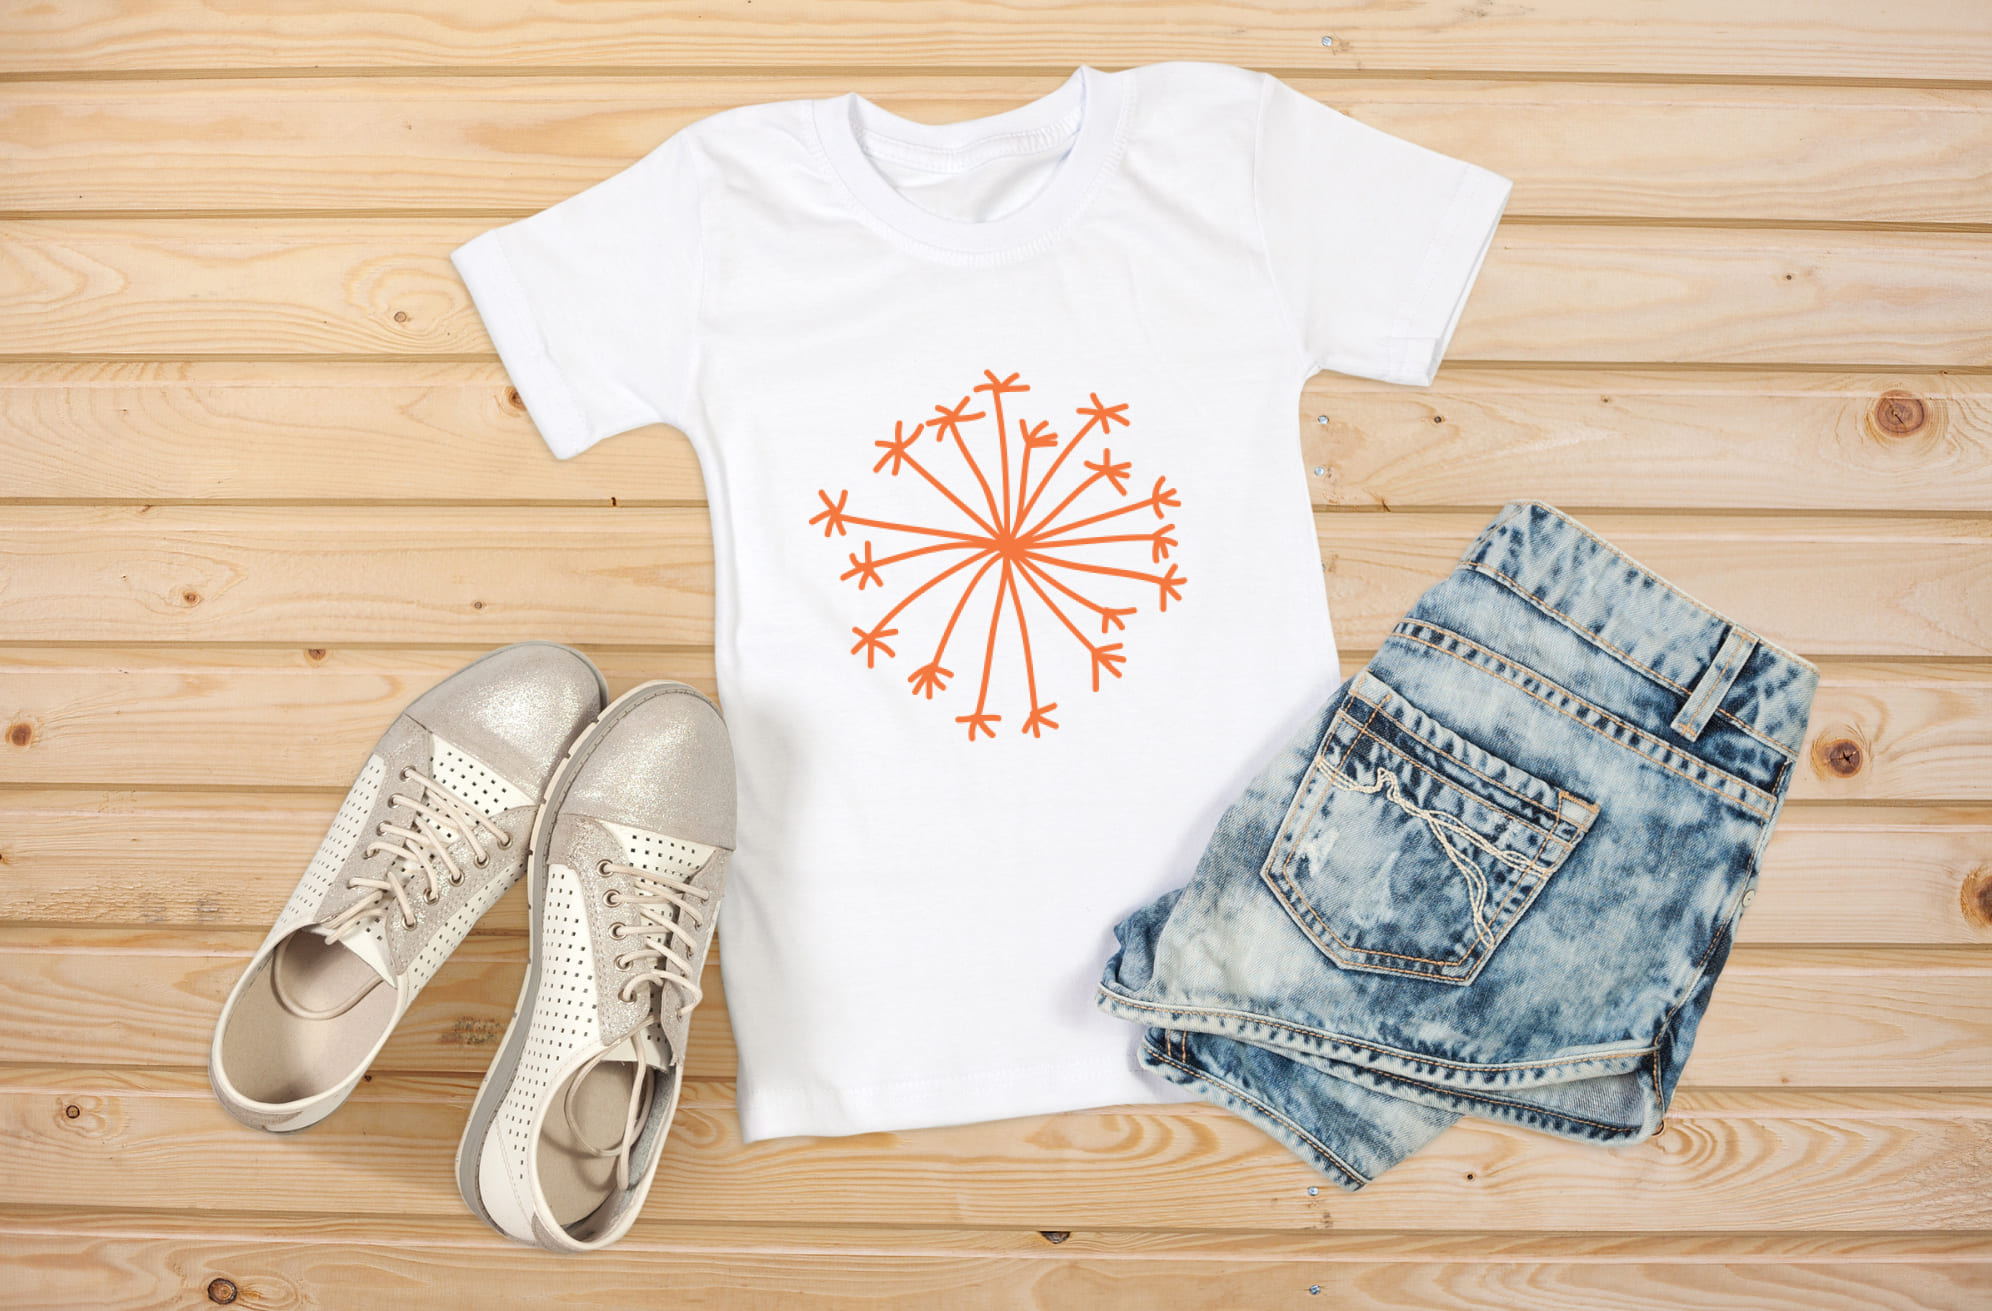 T-shirt image with exquisite dandelion print in orange color.